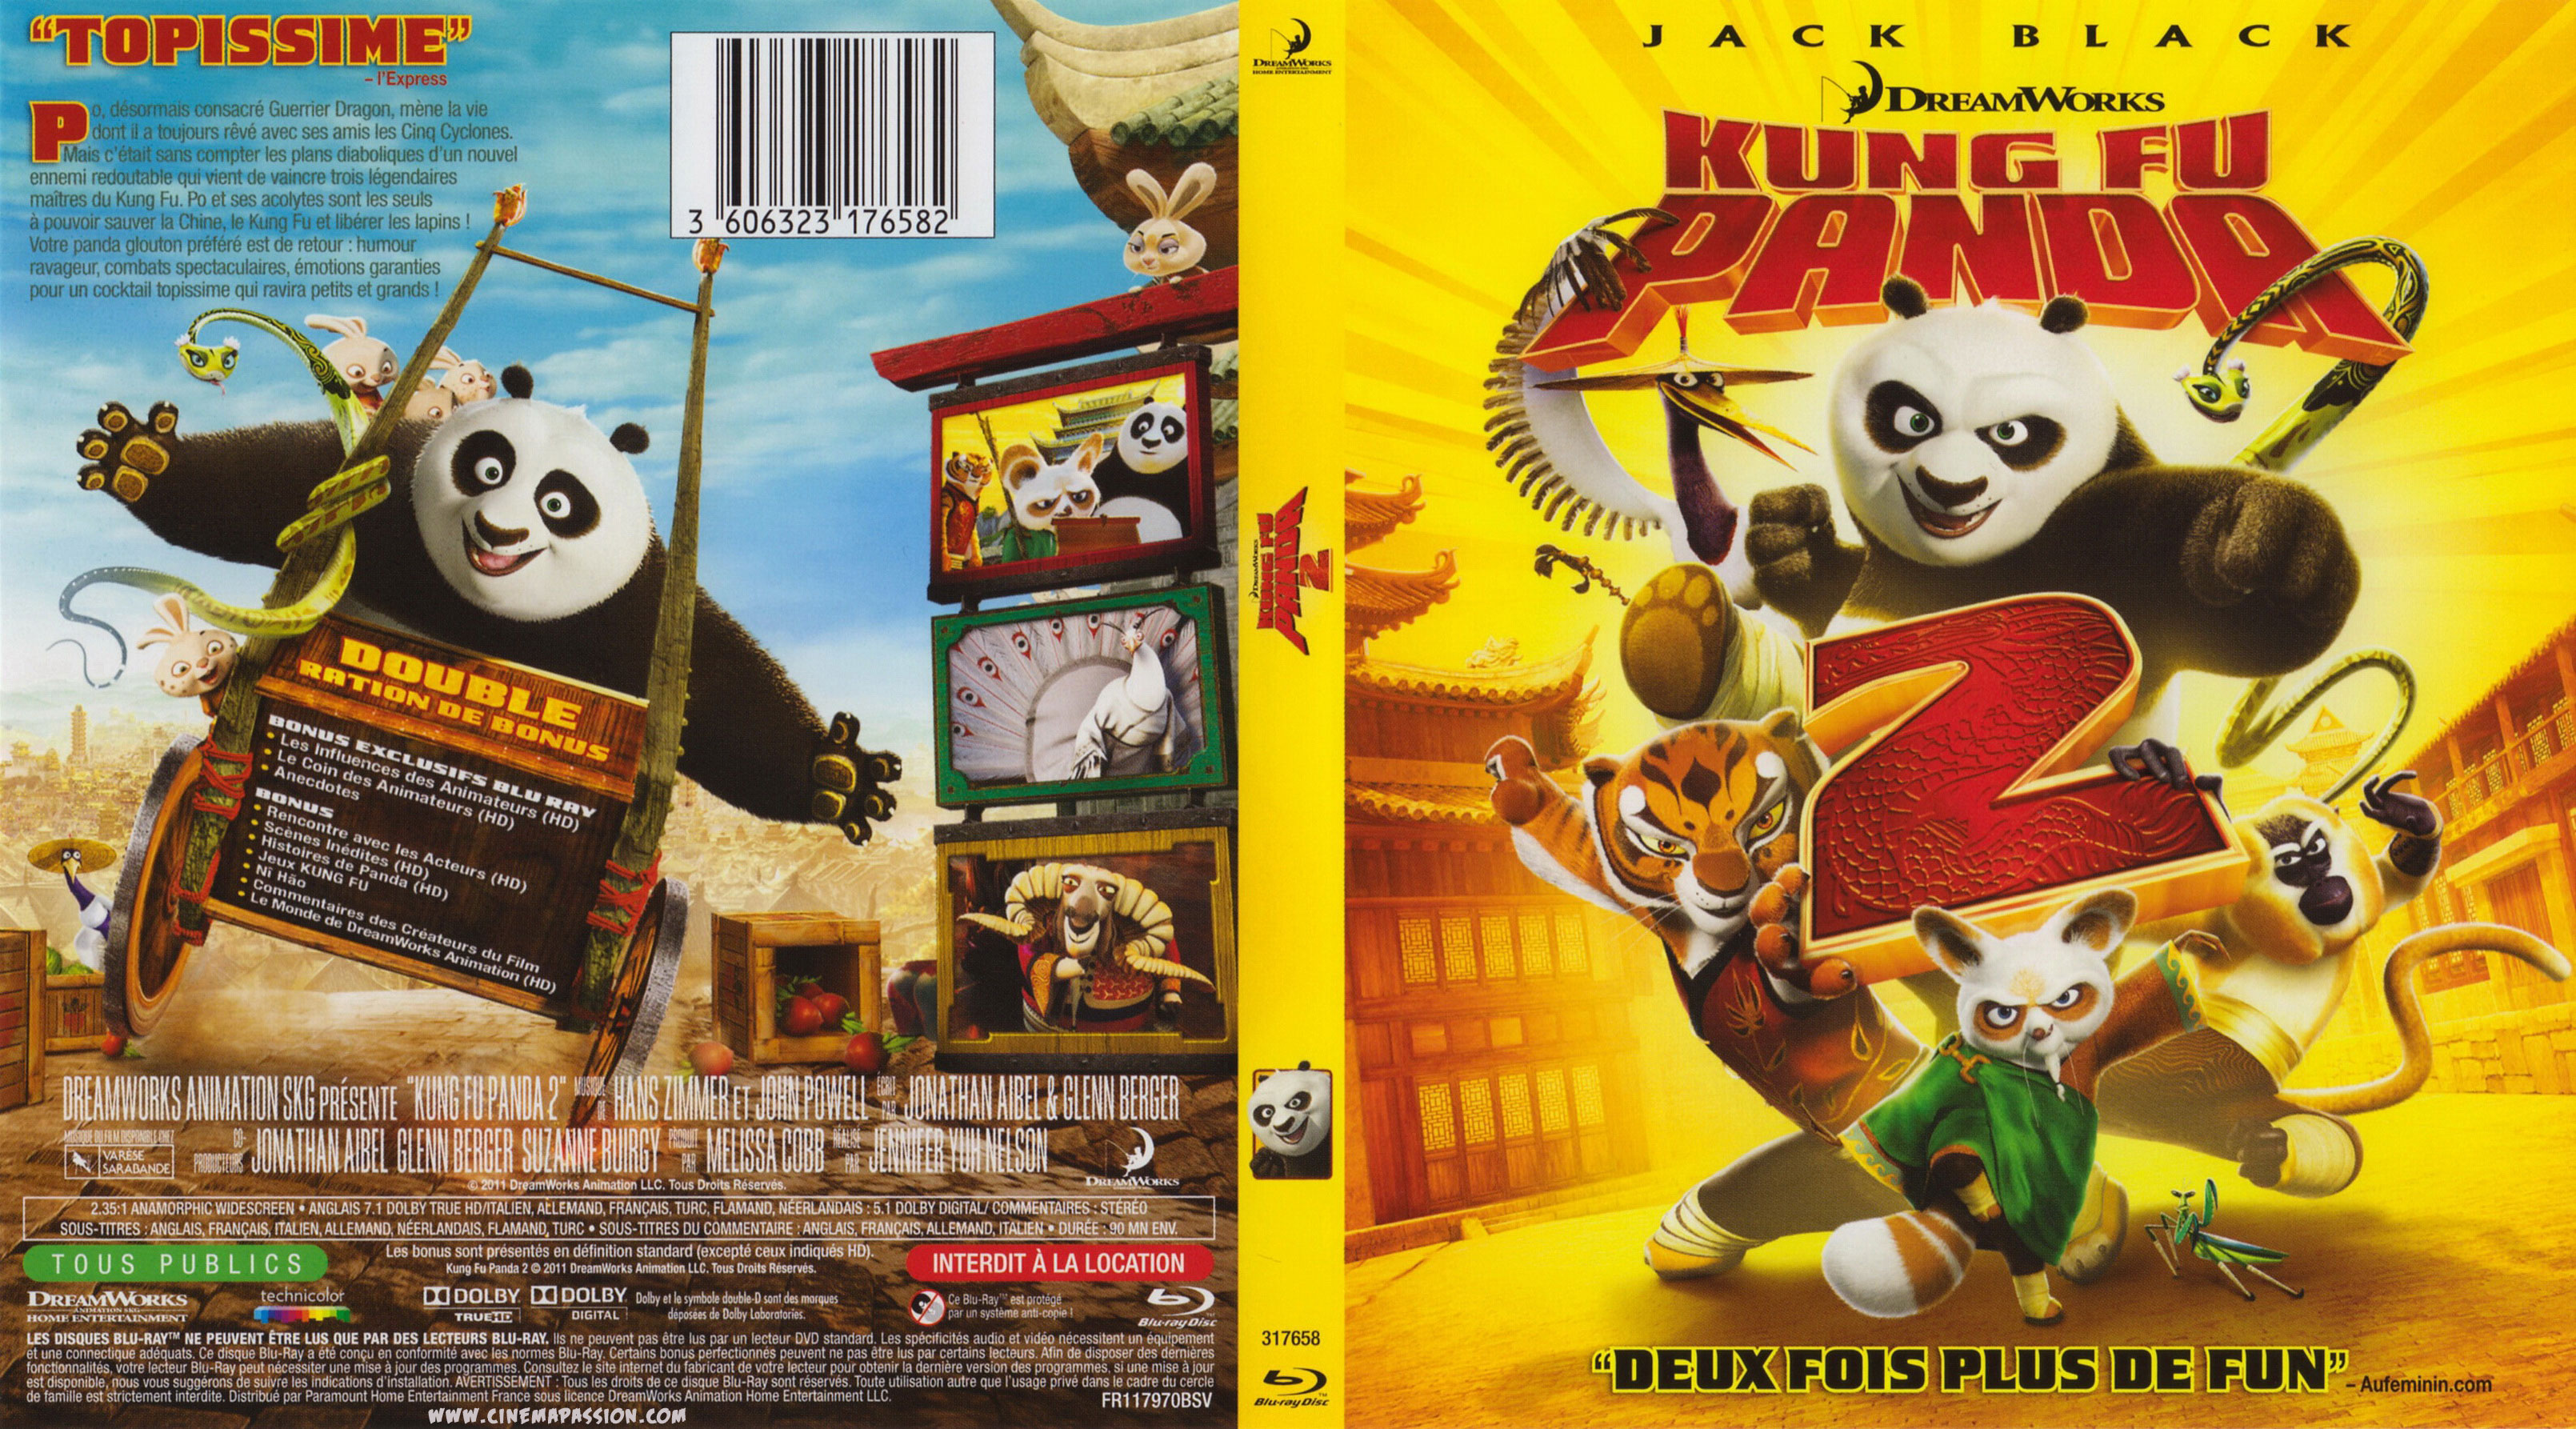 Jaquette DVD Kung fu panda 2 (BLU-RAY)